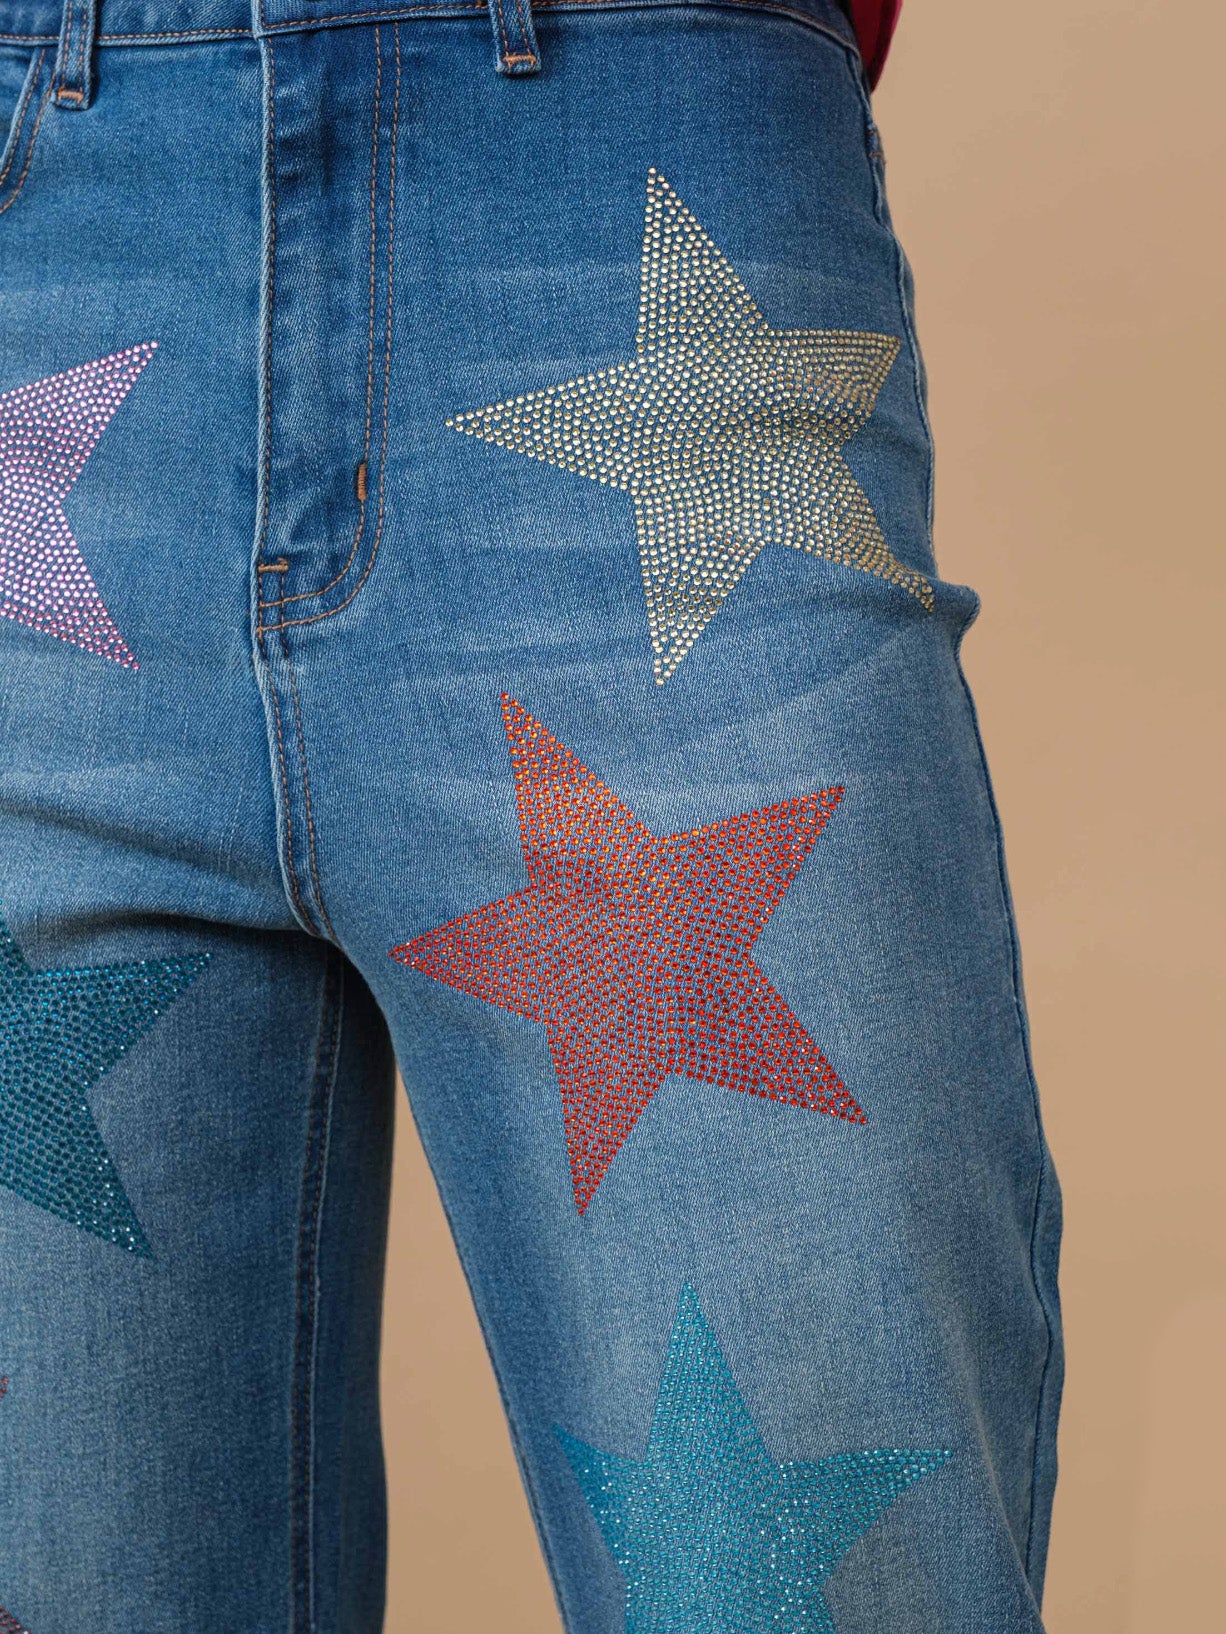 star power rhinestone jeans